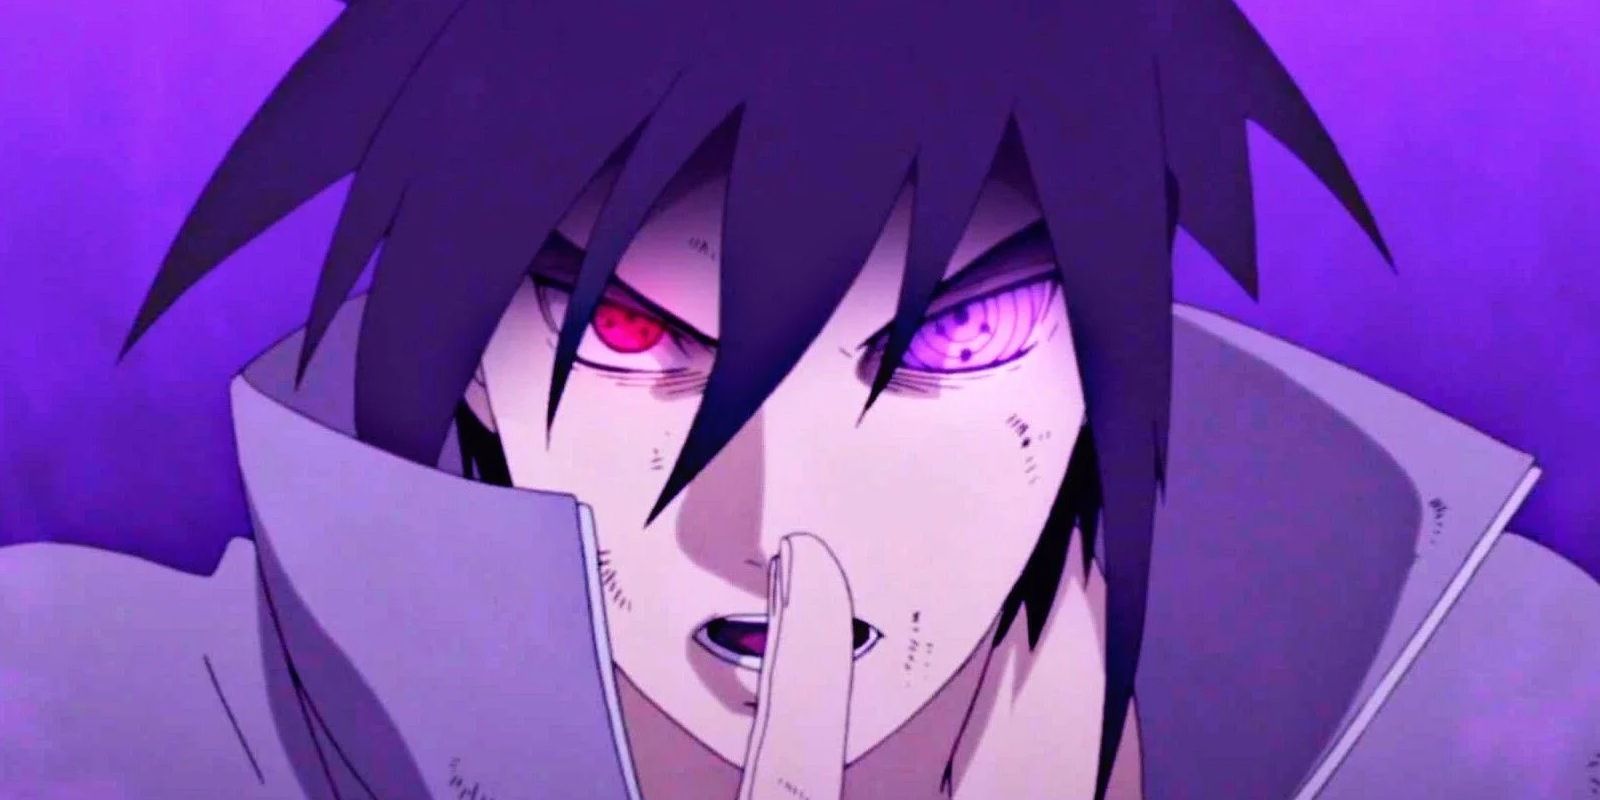 Sasuke activating his Sharingan and Rinnegan in Naruto Shippuden